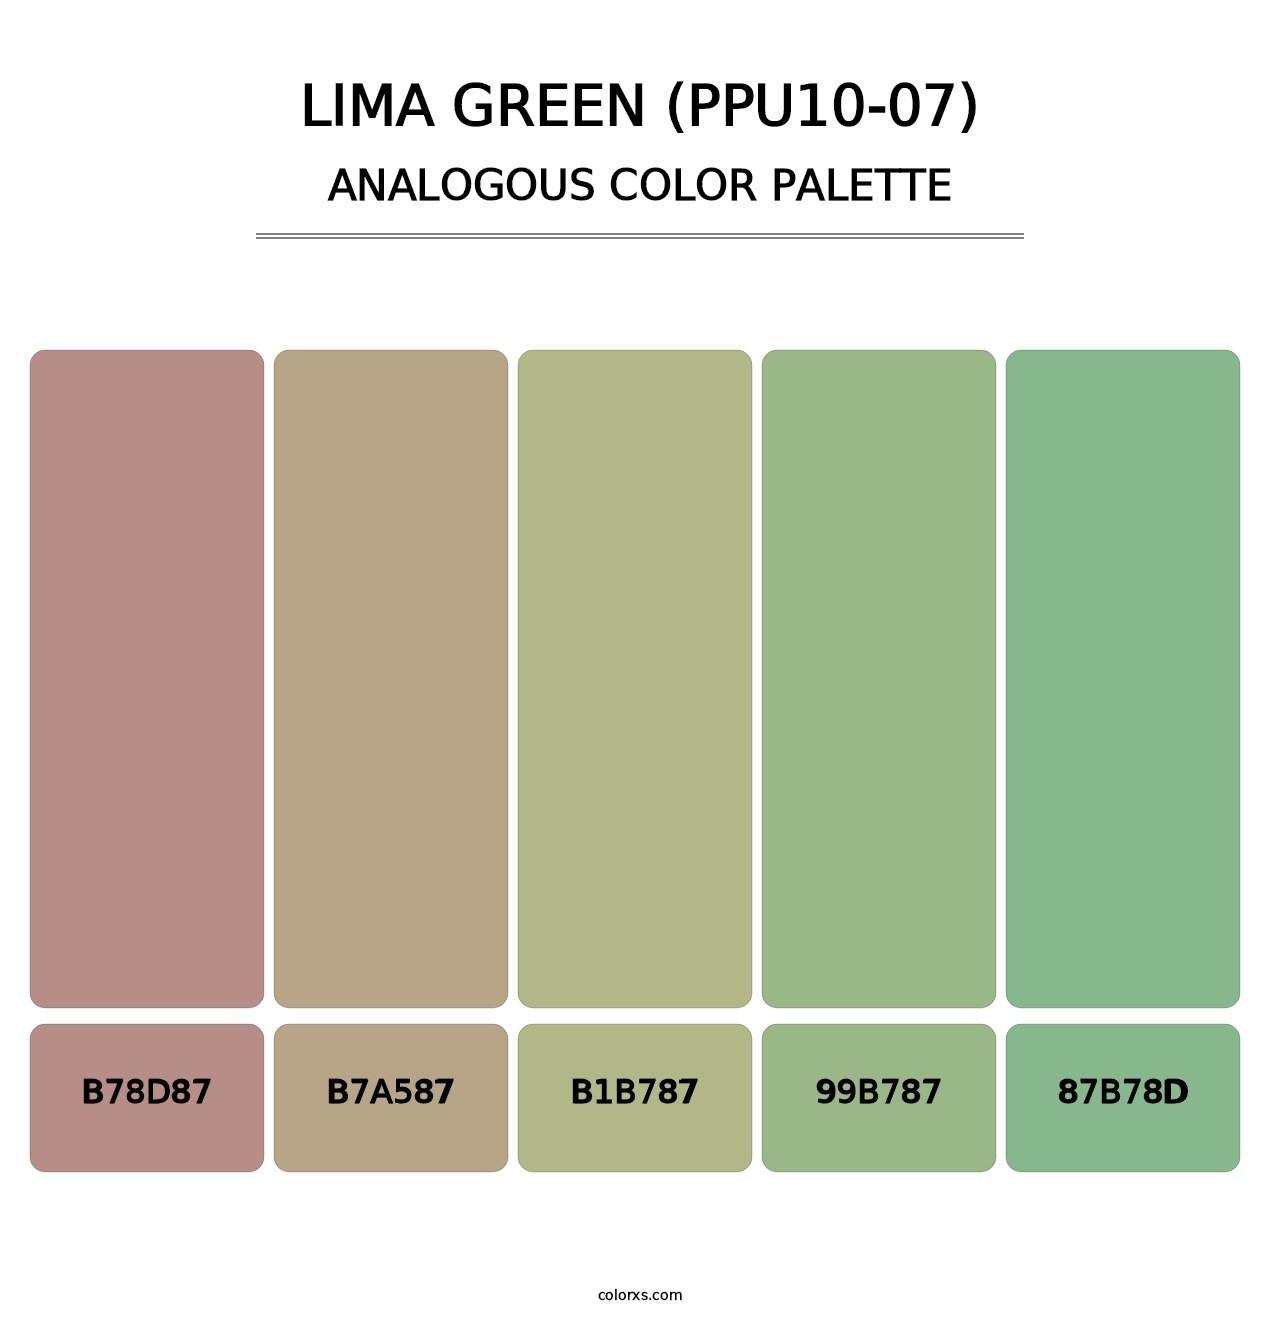 Lima Green (PPU10-07) - Analogous Color Palette